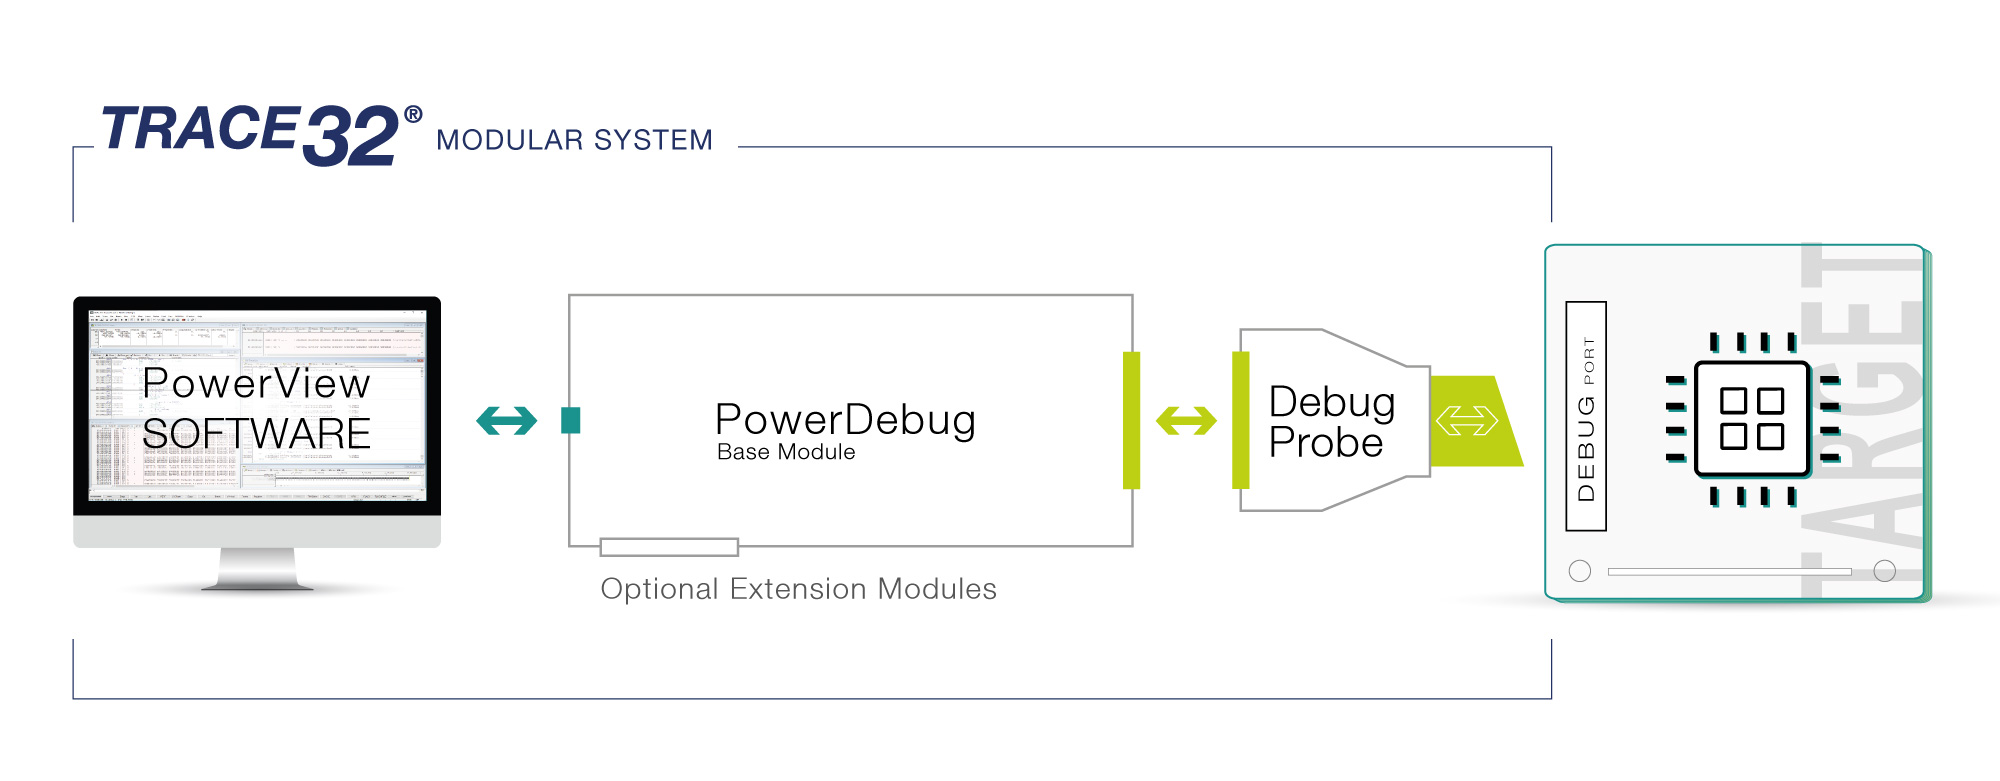 PowerDebugシステム - モジュラー構造